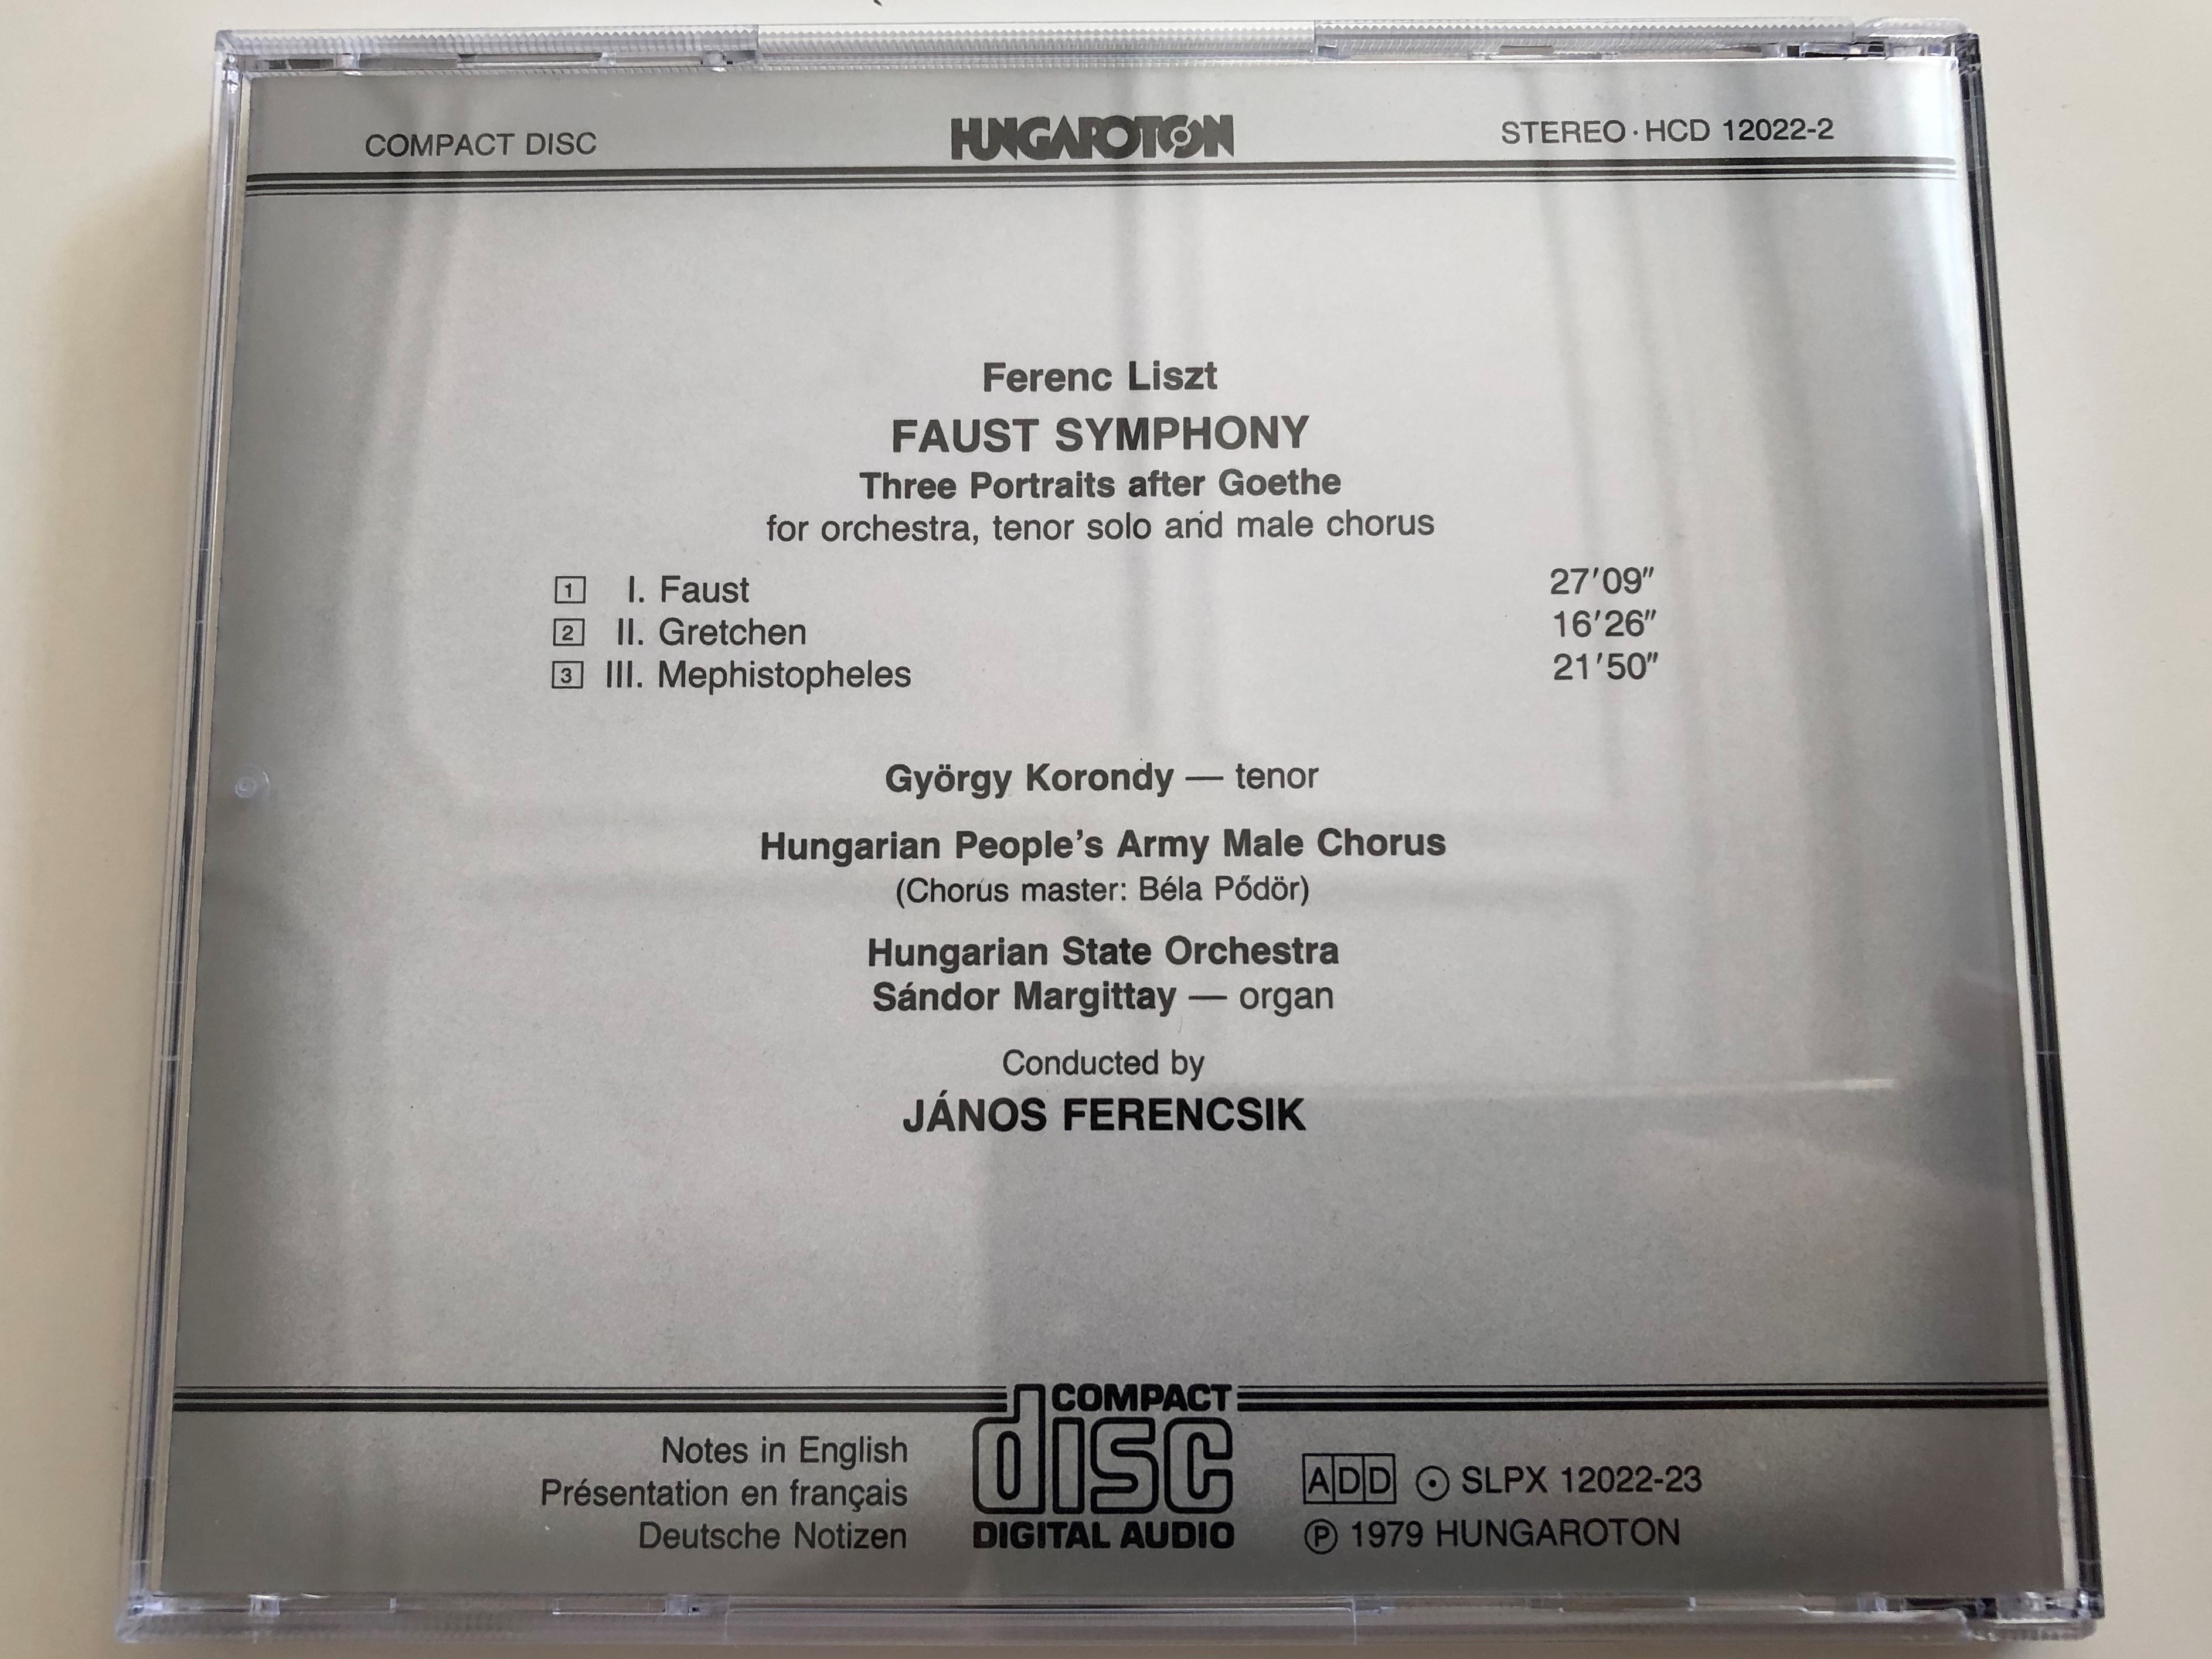 liszt-ferenc-faust-symphony-gyorgy-korondy-hungarian-state-orchestra-janos-ferencsik-hungaroton-classic-audio-cd-1994-stereo-hcd-12022-2-7-.jpg